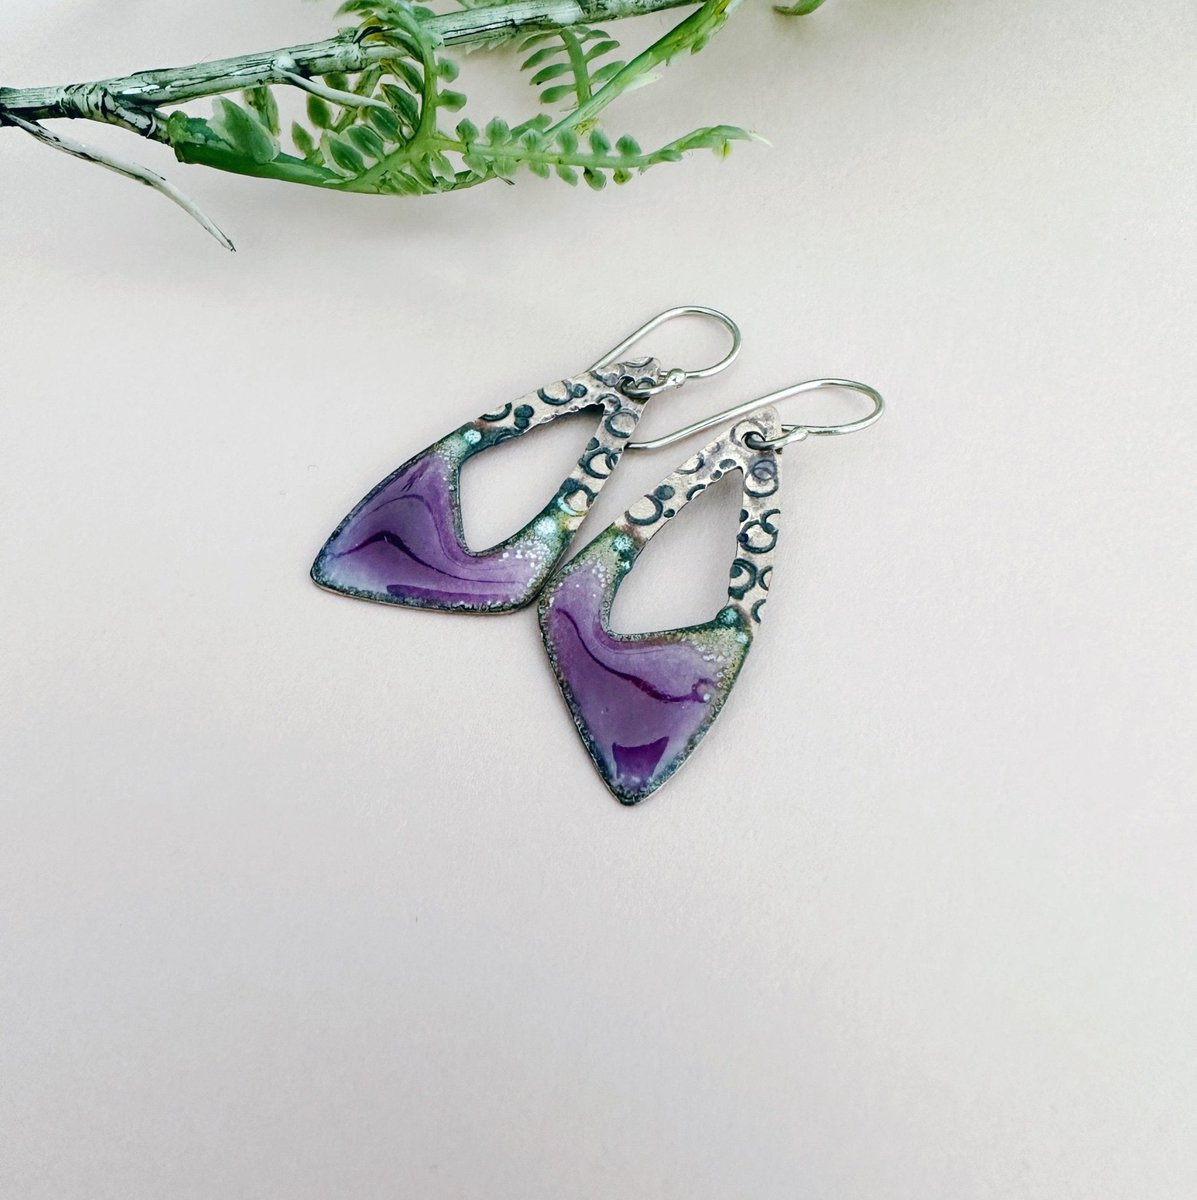 Irregular Triangle Earrings - Purple tuppu.net/76a5d53a #HandmadeHour #UKHashtags #MHHSBD ##UKGiftHour #giftideas #inbizhour #shopsmall #bizbubble #EnamelEarrings